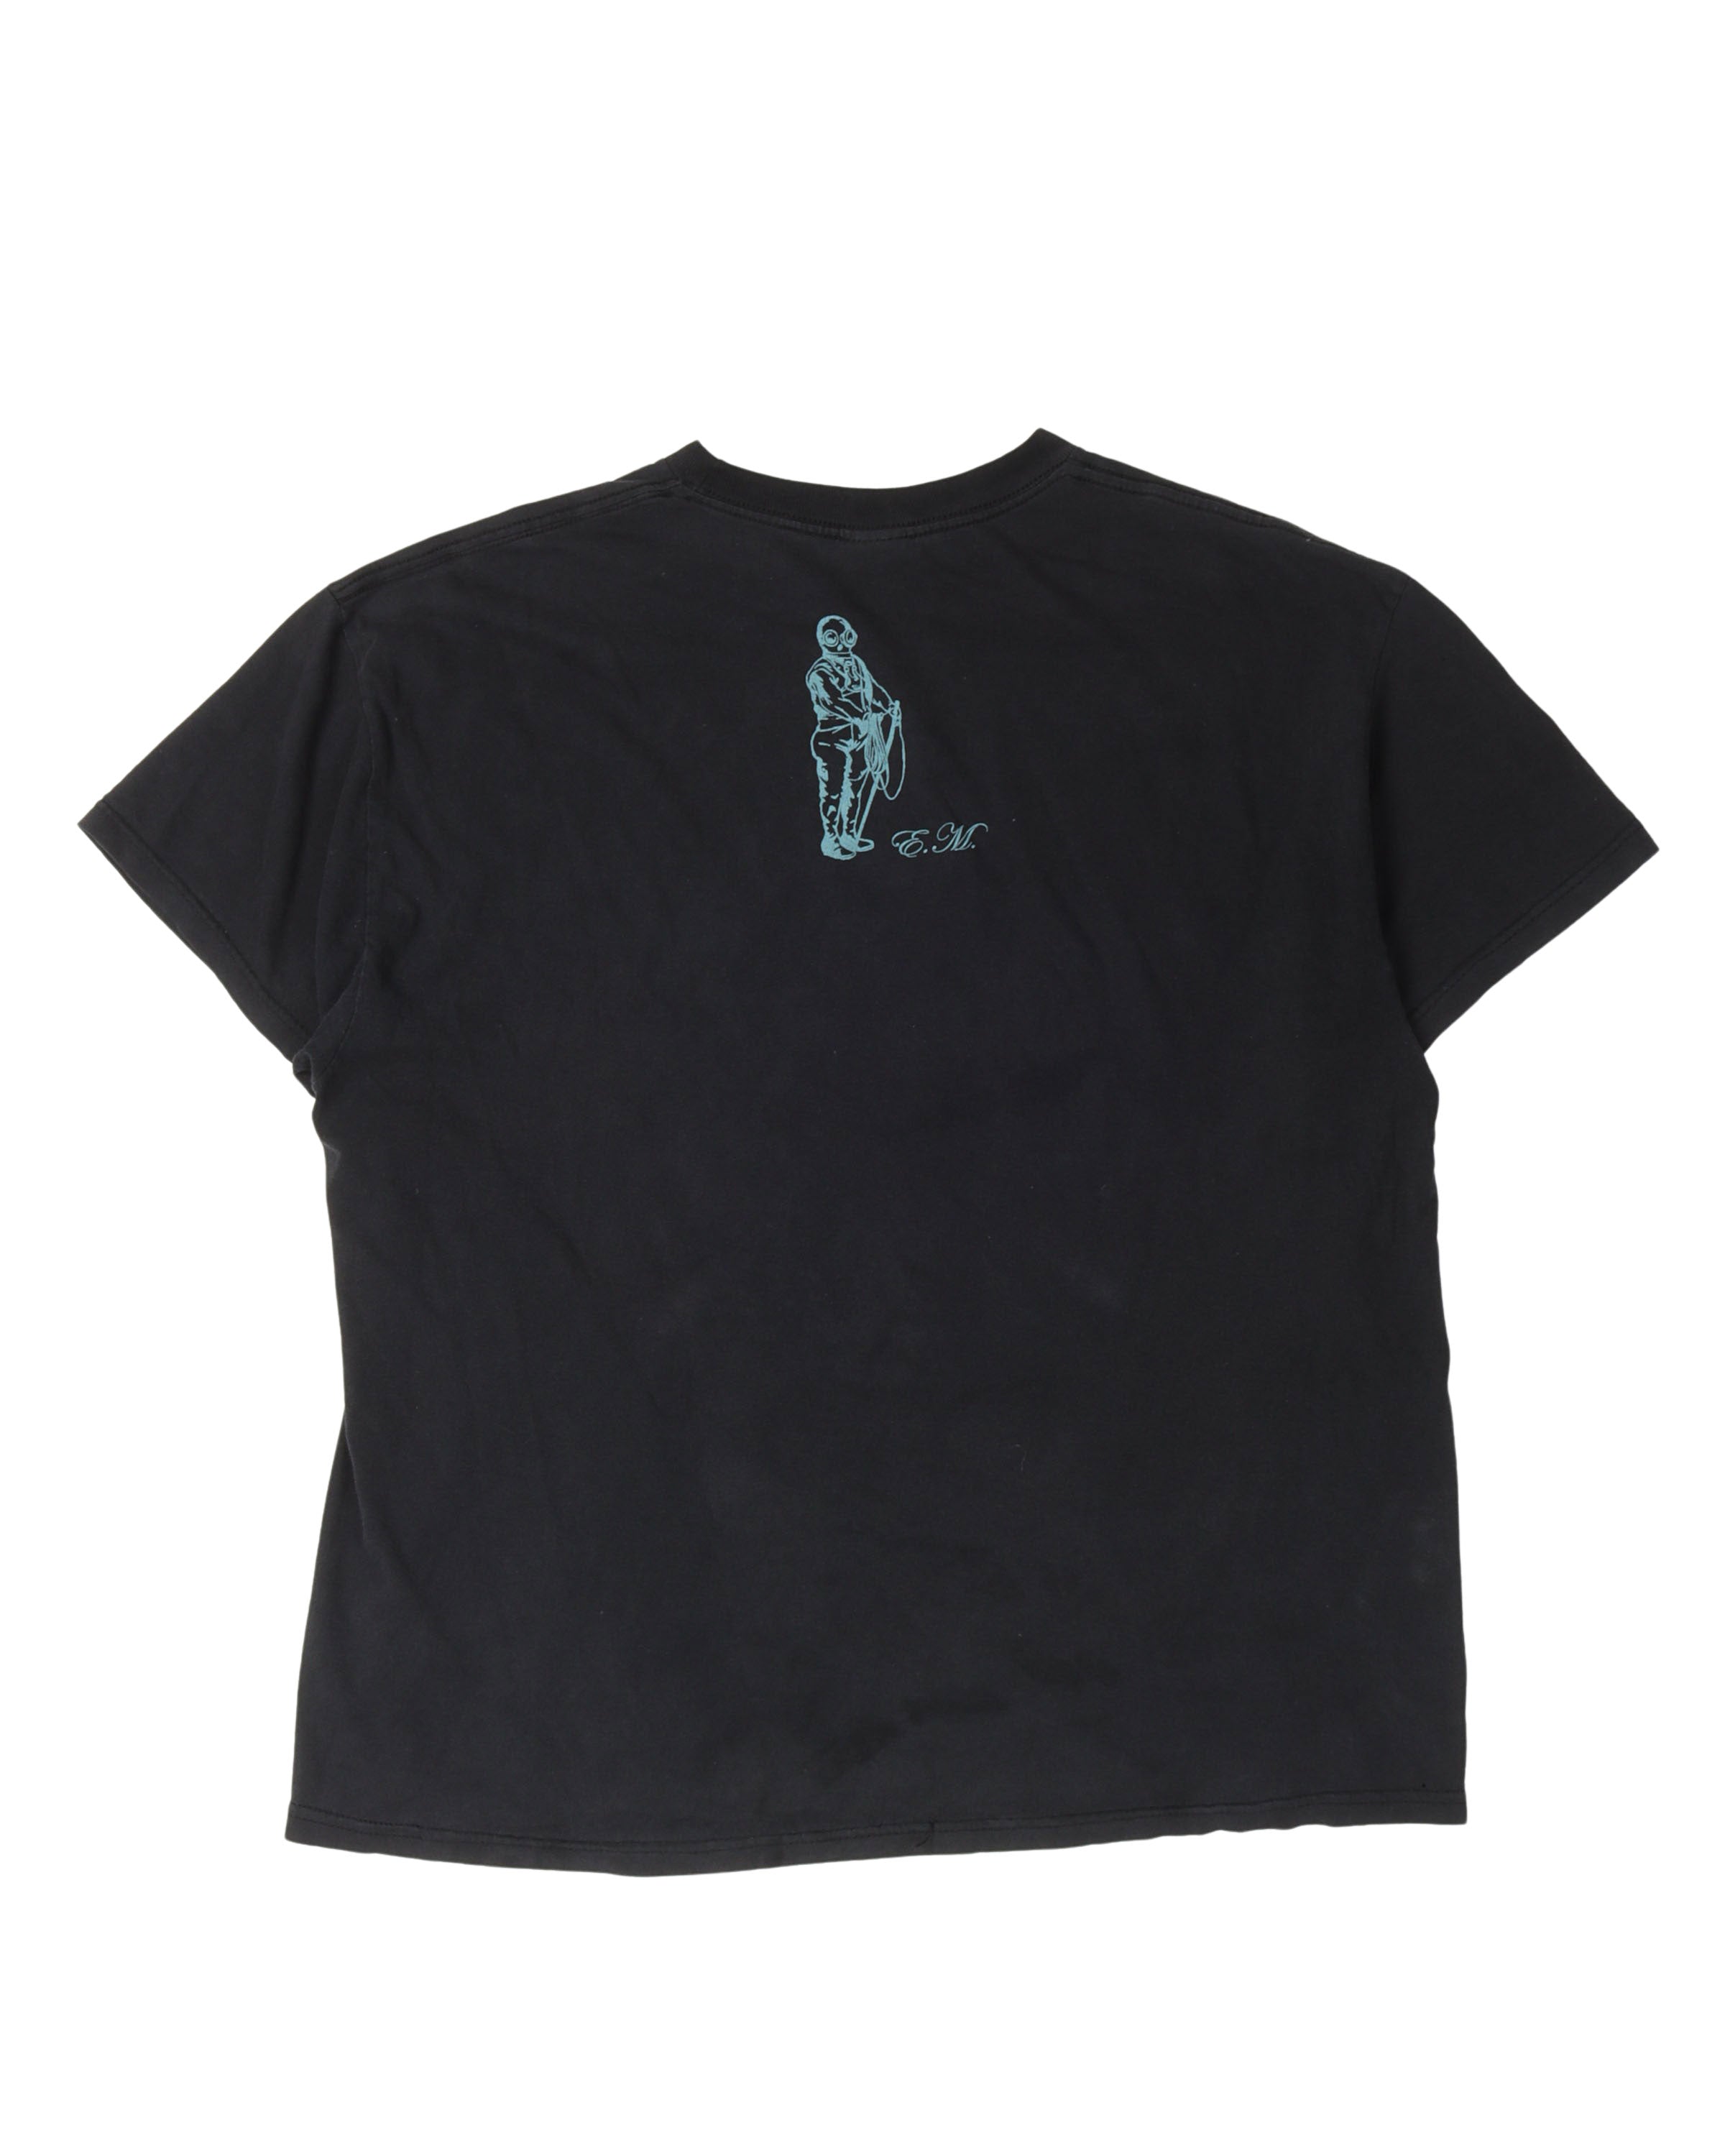 Melvins 1998 T-Shirt